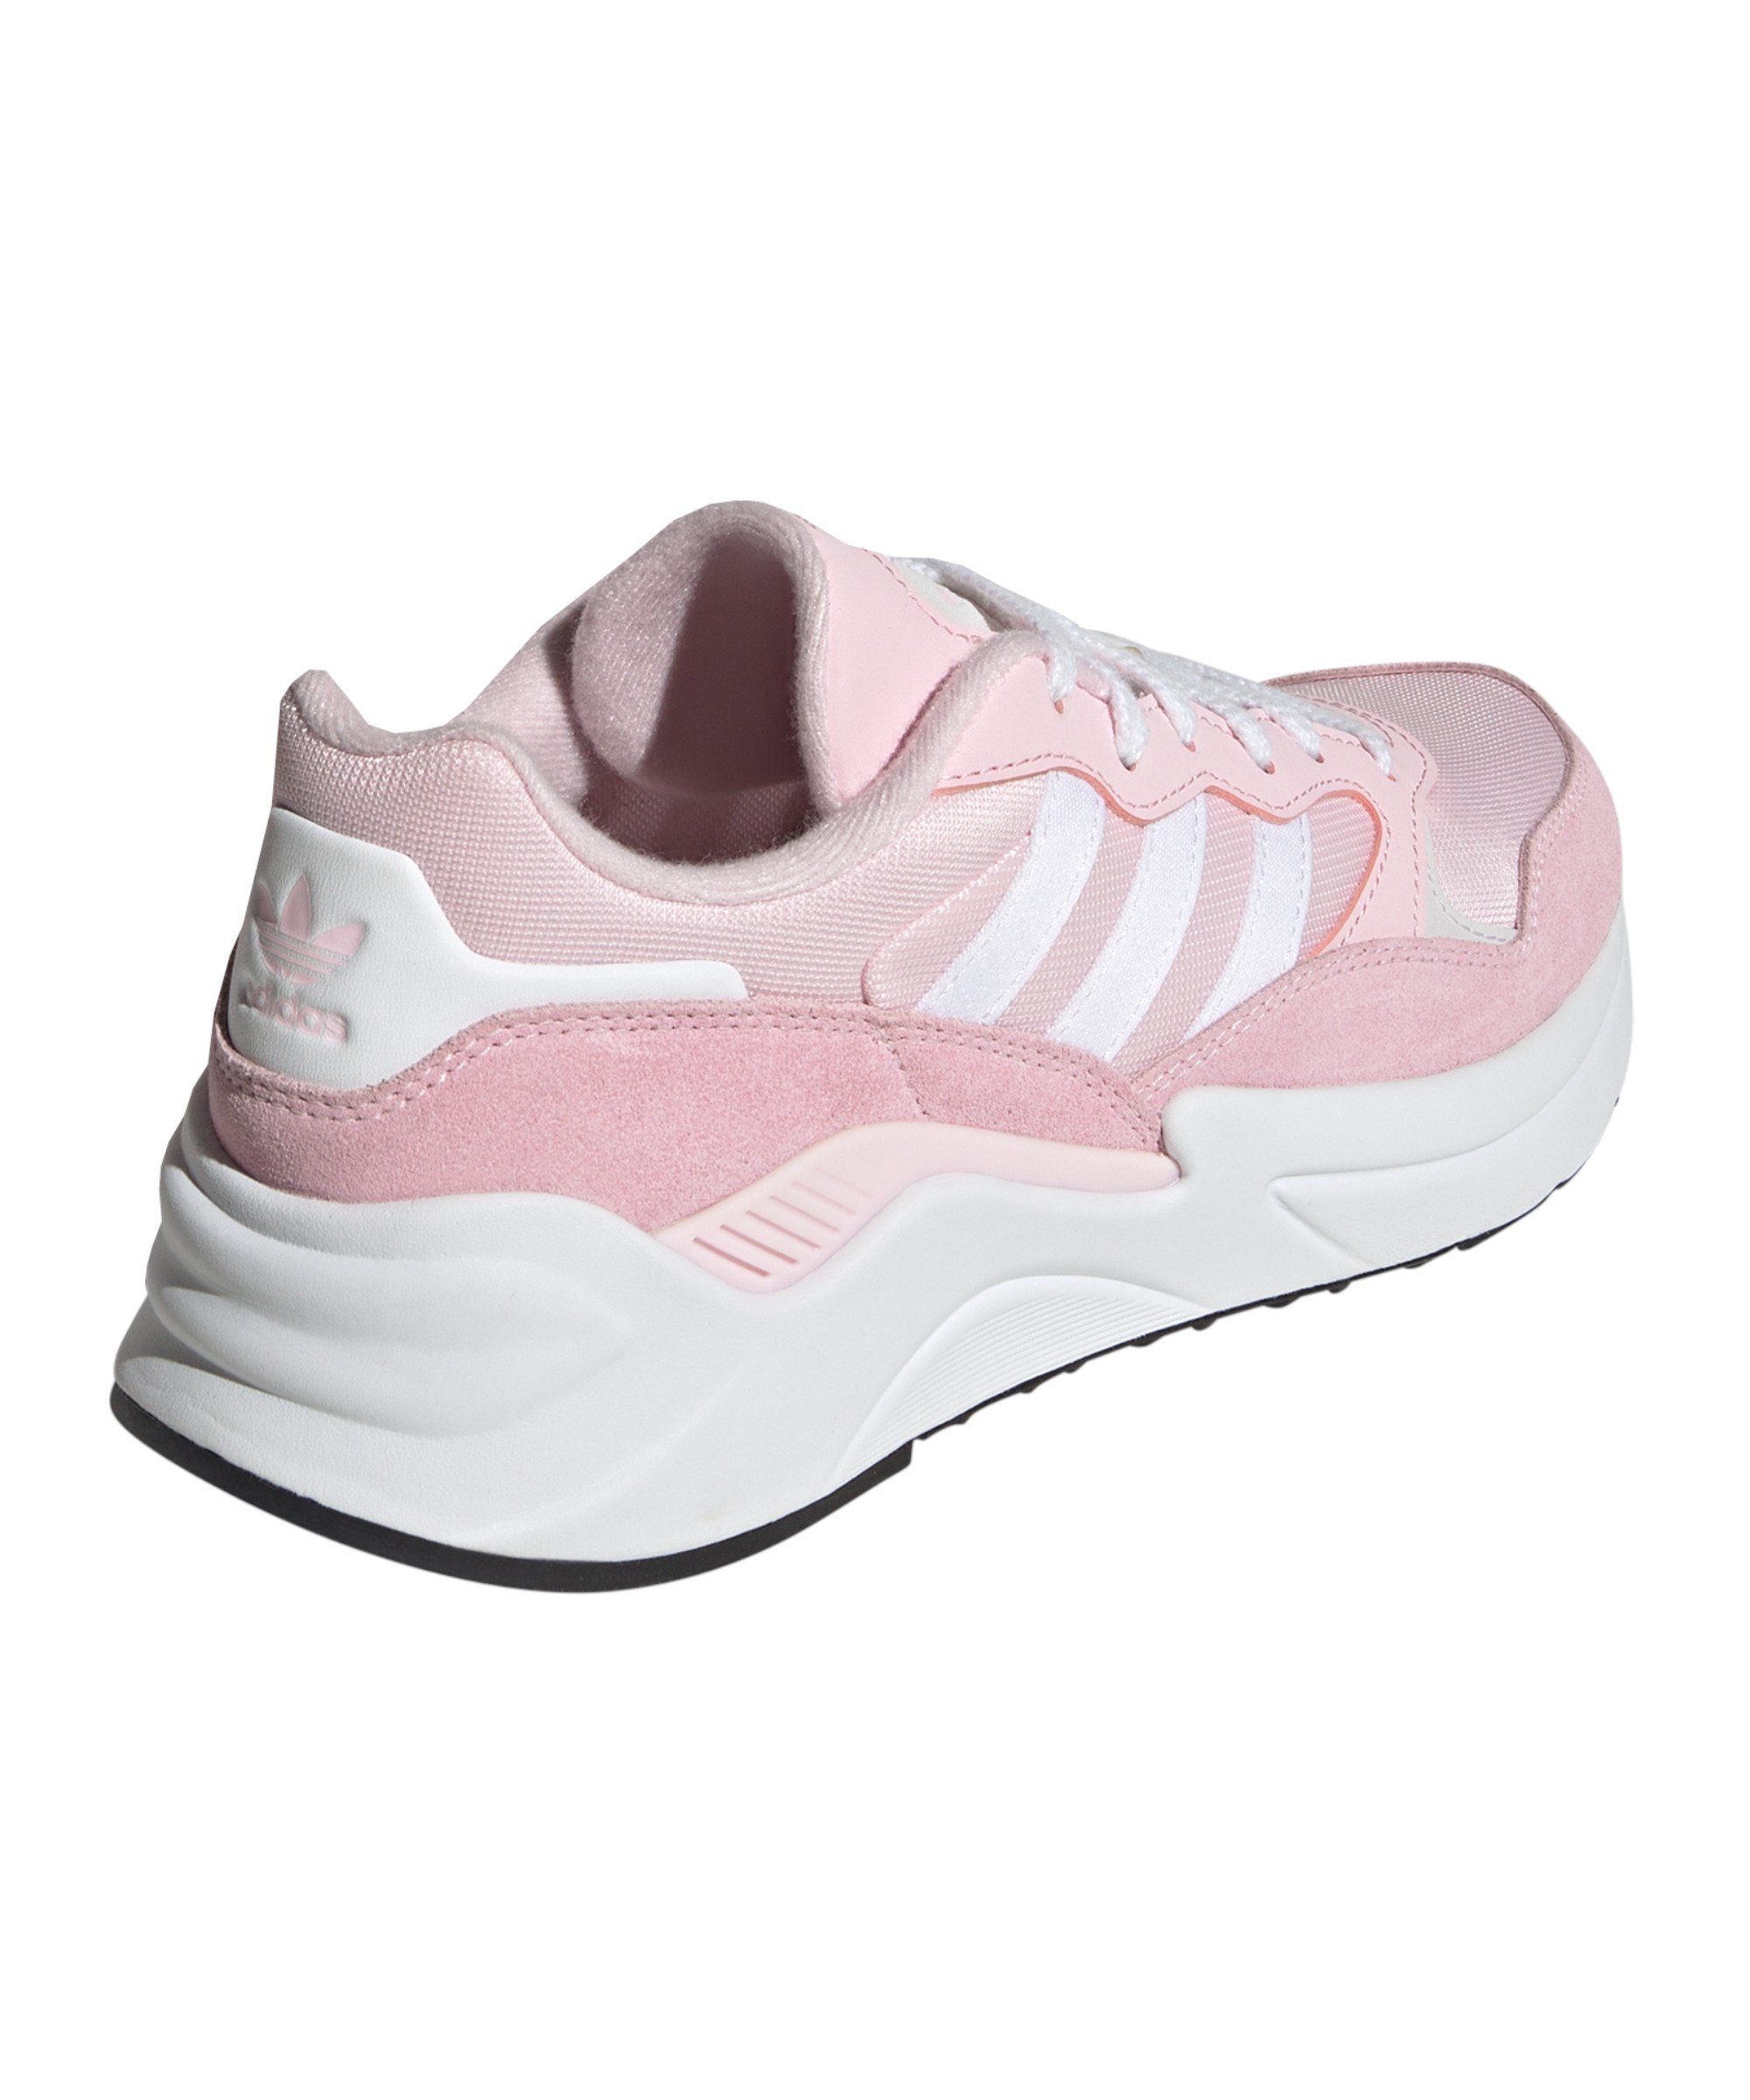 adidas Originals Retropy Sneaker Damen pinkweisspink Adisuper